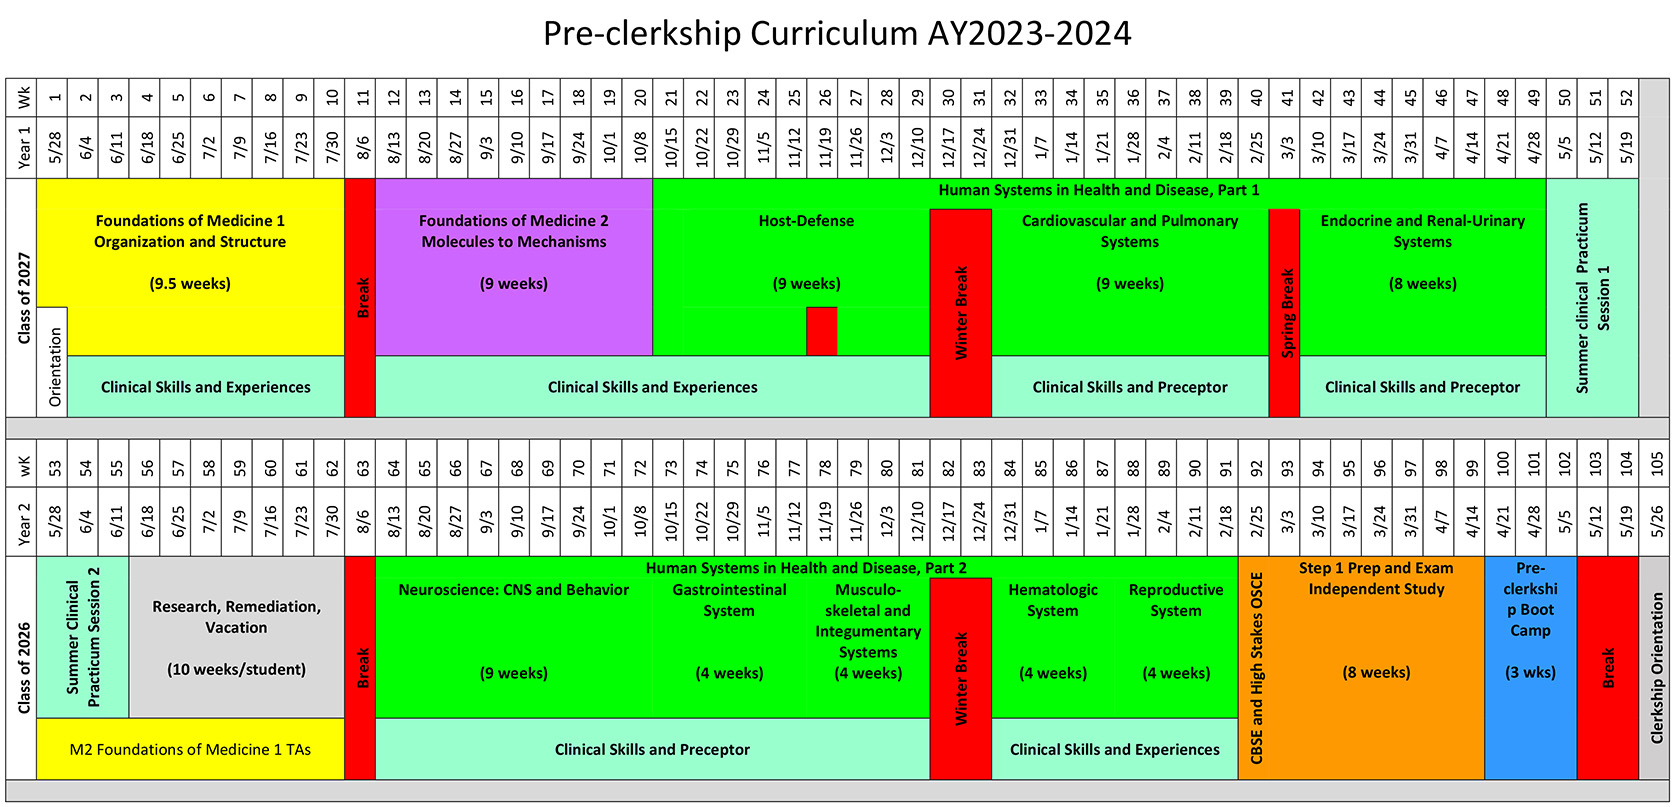 Pre-clerkship curriculum map_AY2023-2024